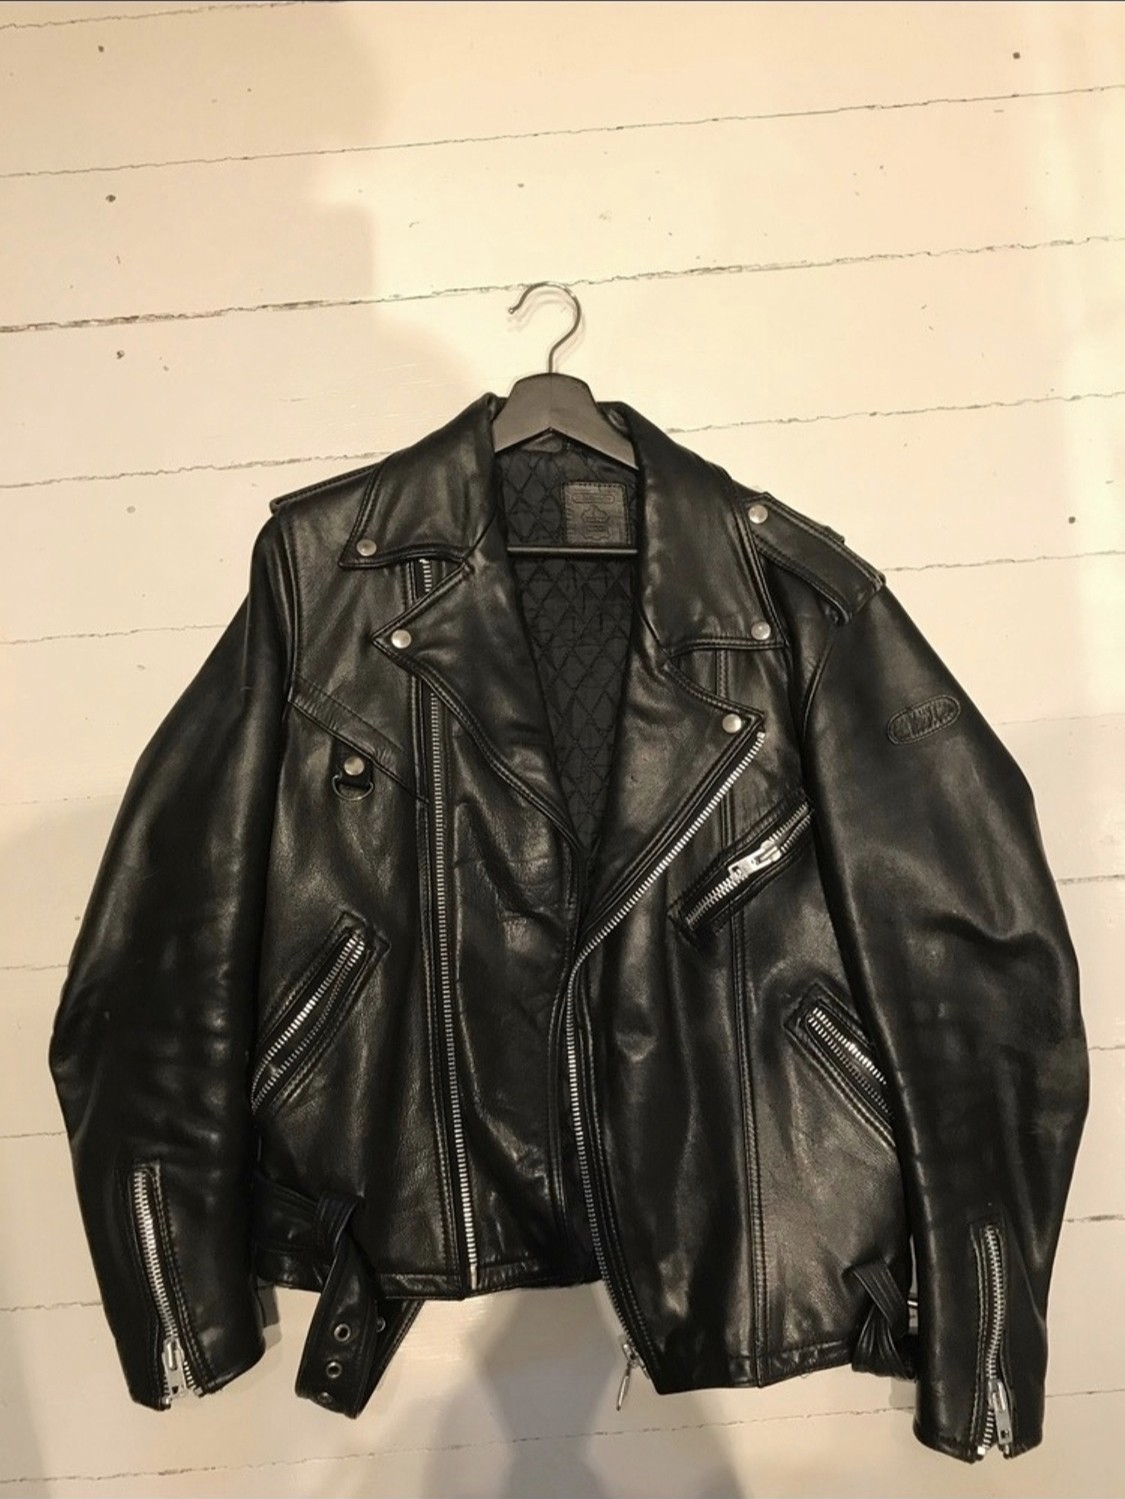 Hein Gericke - Leather jacket - 1